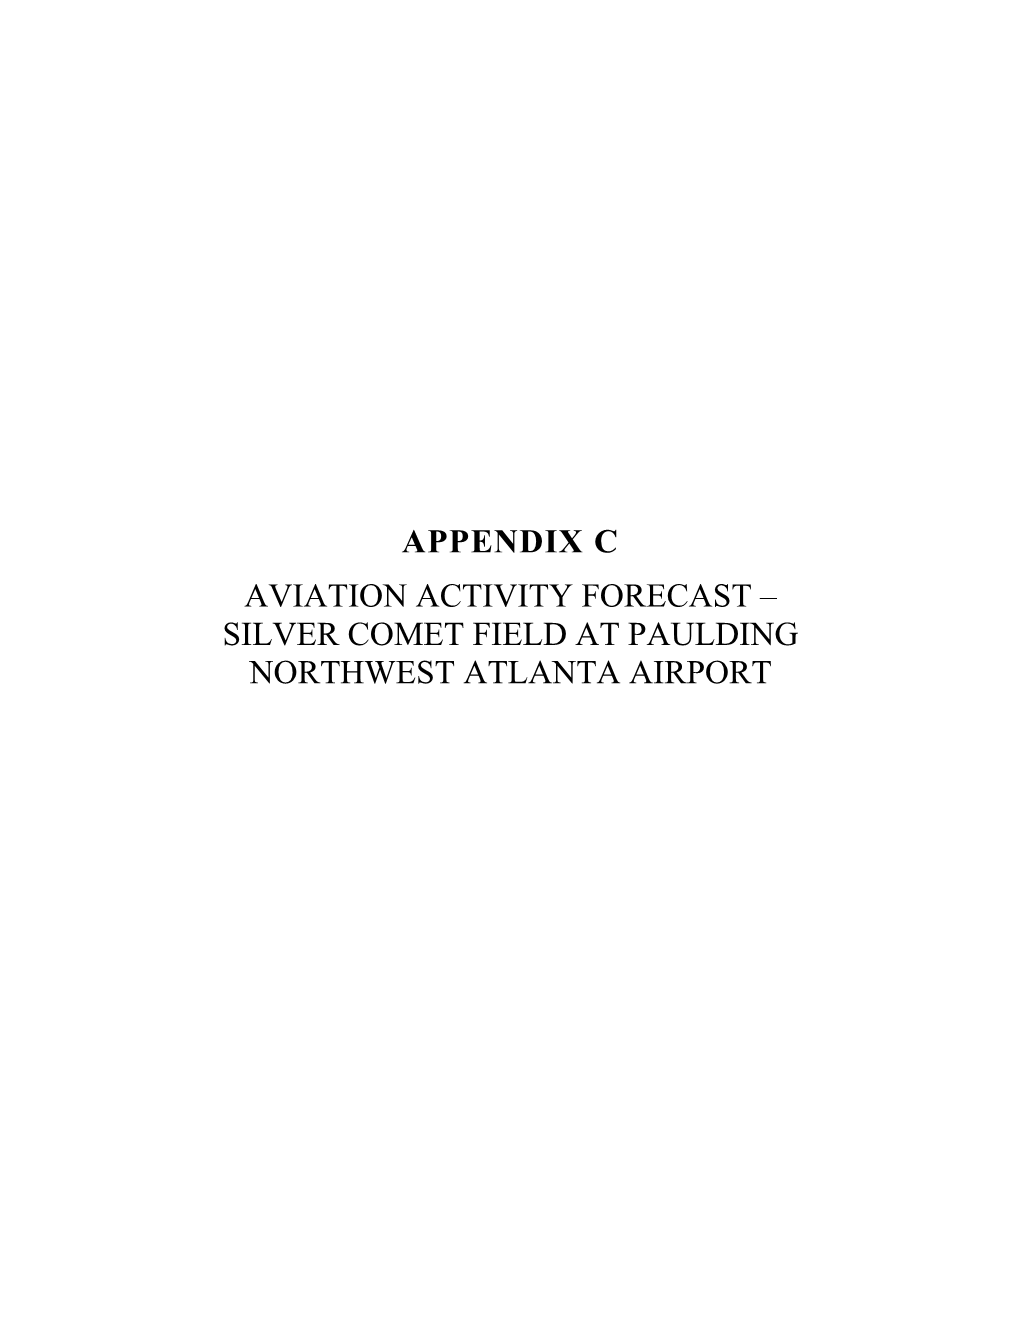 Appendix C Aviation Activity Forecast – Silver Comet Field at Paulding Northwest Atlanta Airport